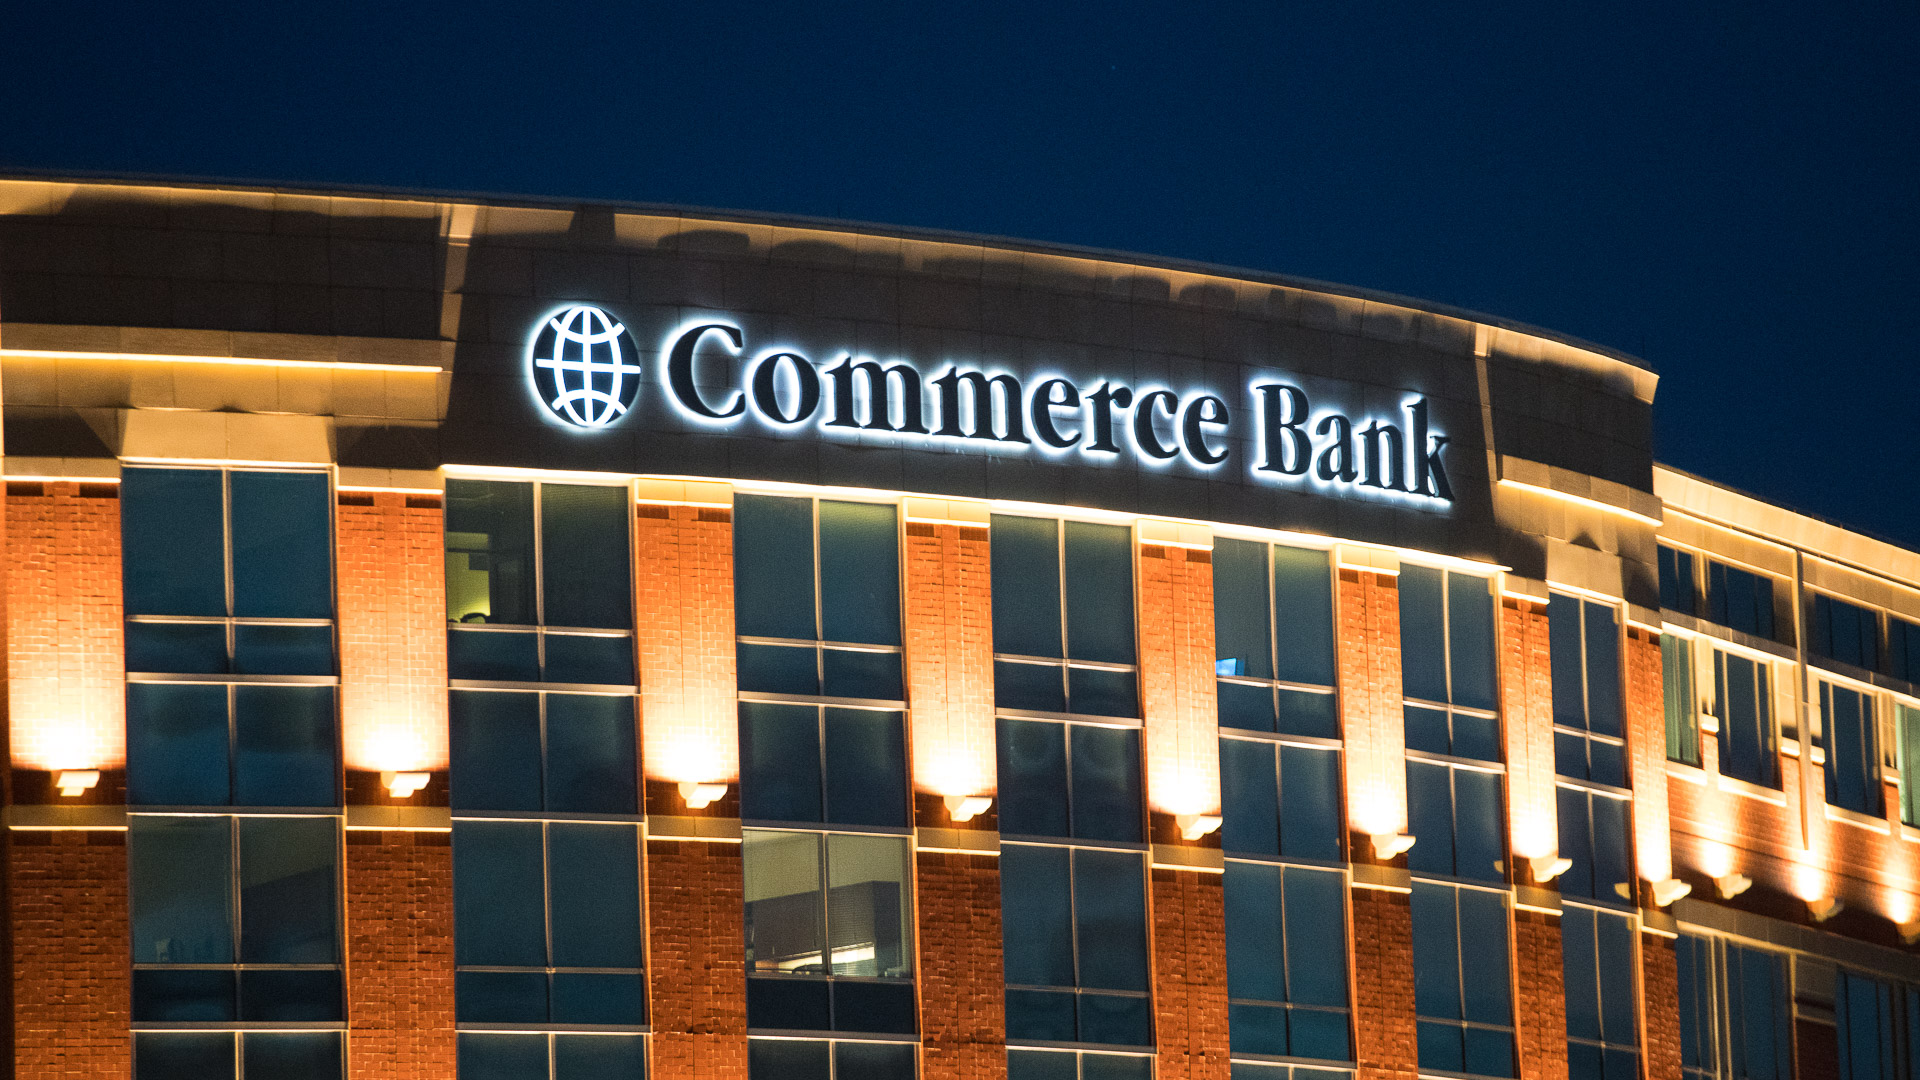 Commerce Bank at the Waterfront in Wichita KS Luminous Neon Art 